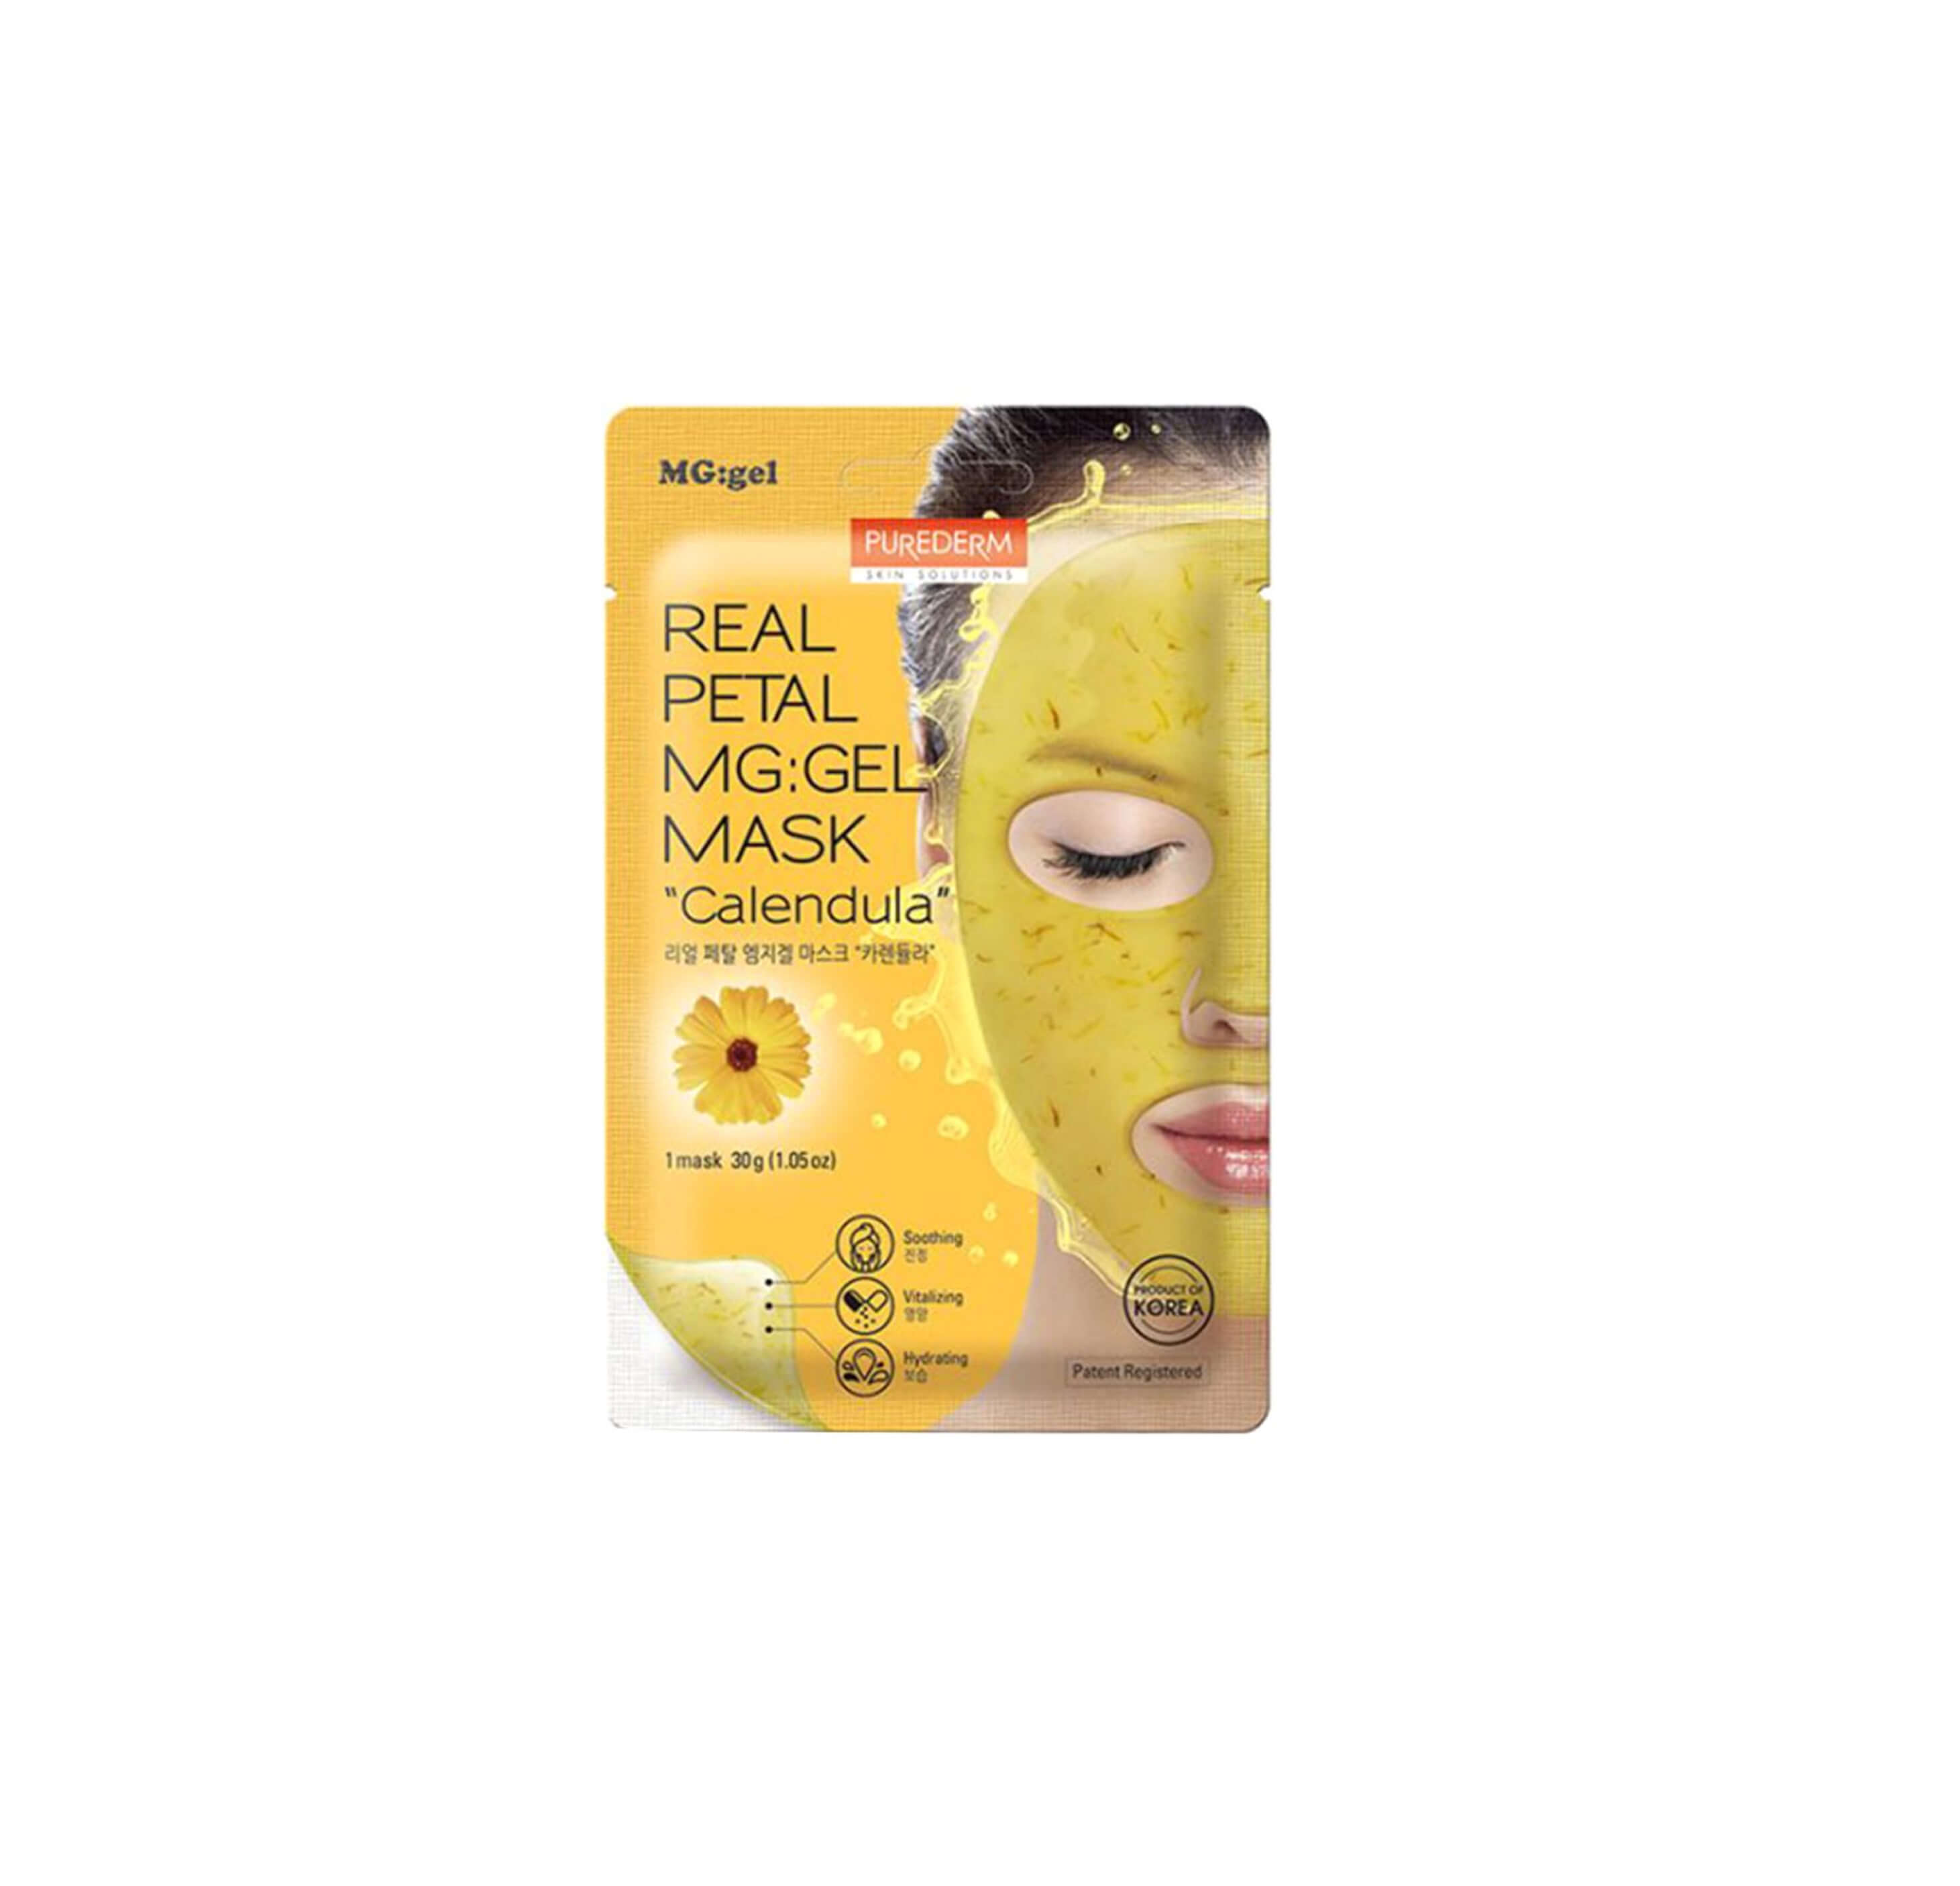 Purederm Real Petal MG Gel Mask Calendula